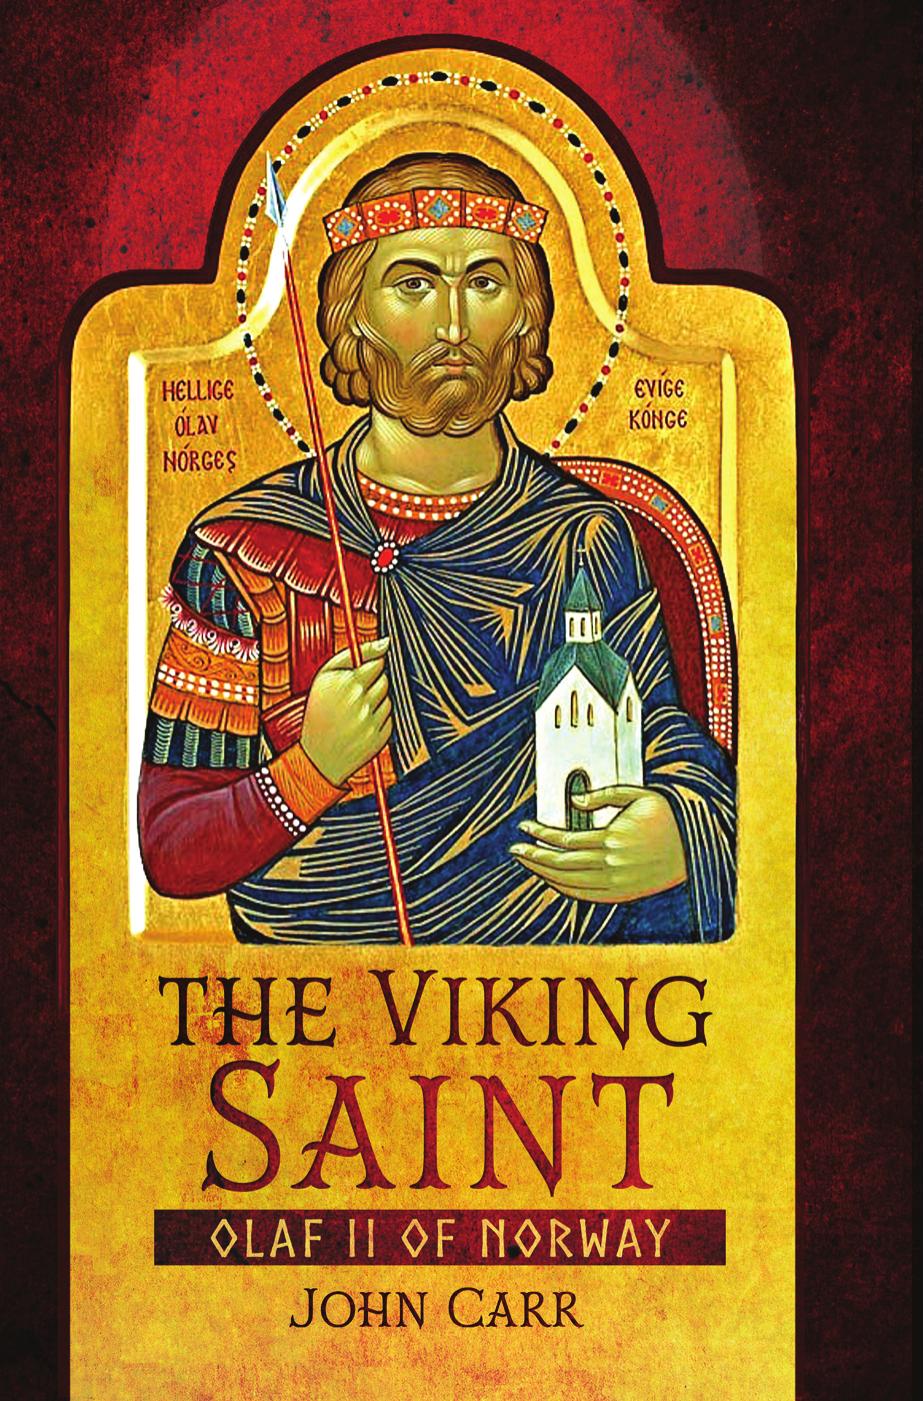 The Viking Saint by John Carr